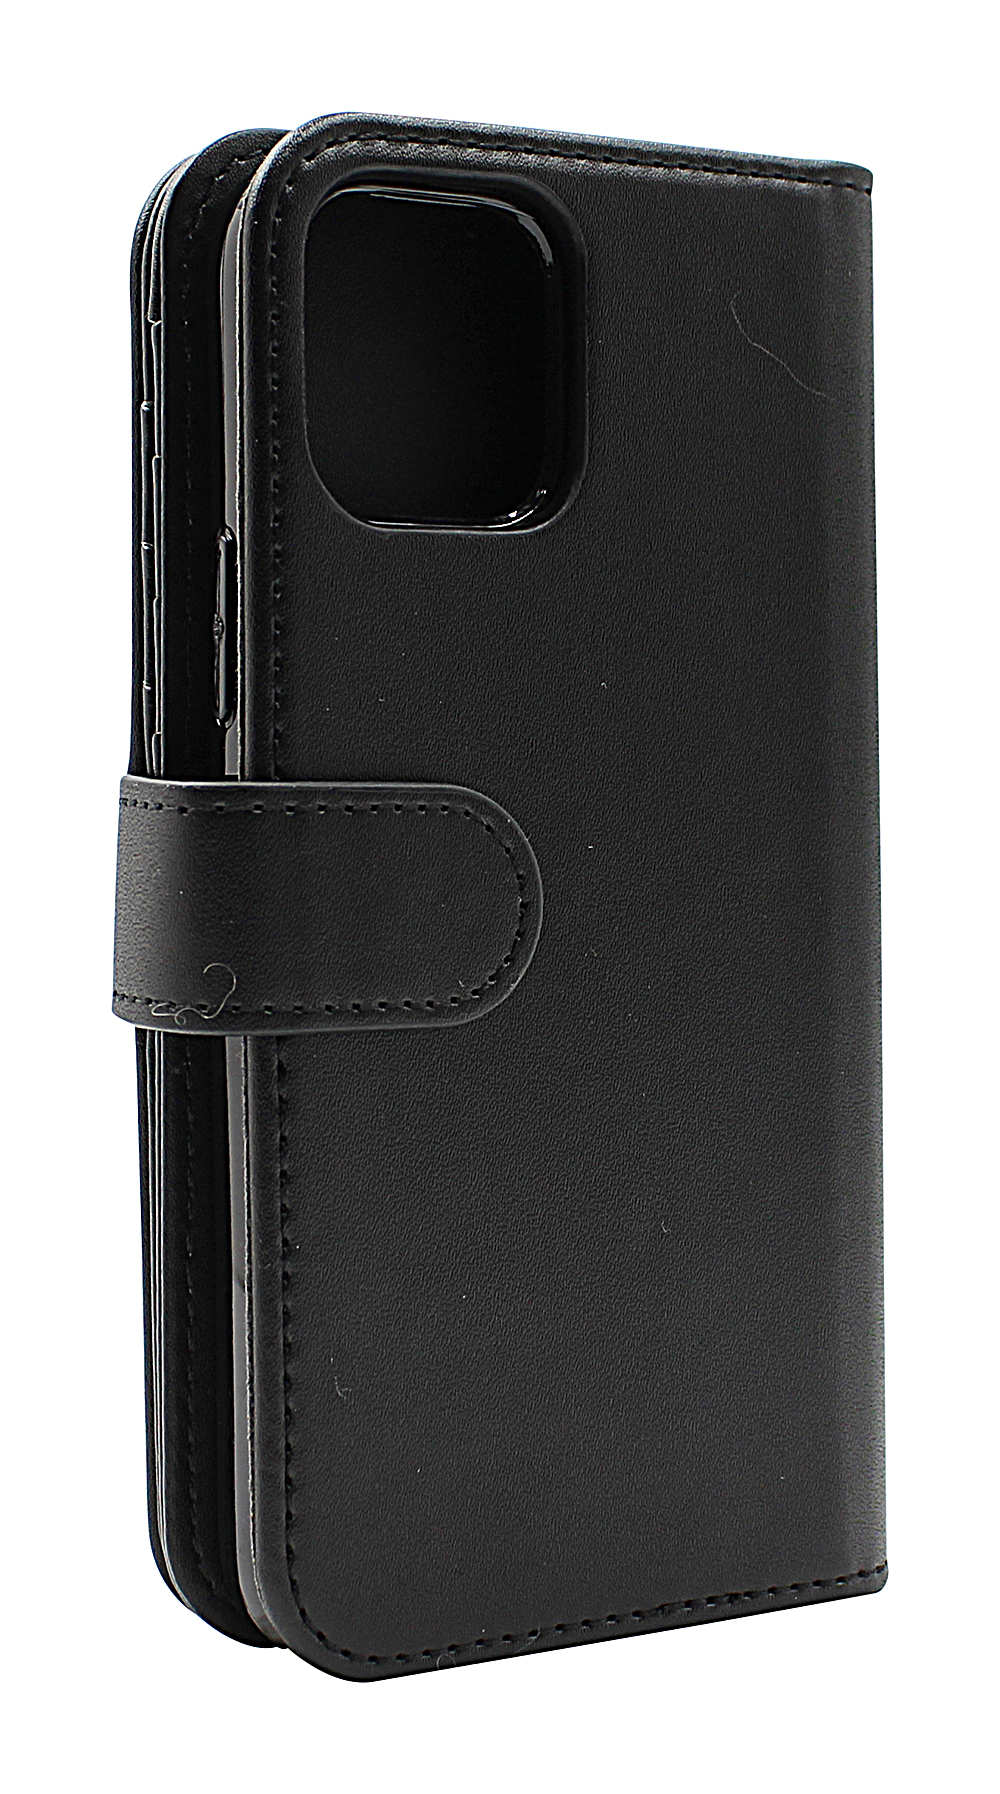 Skimblocker XL Wallet iPhone 13 Pro (6.1)